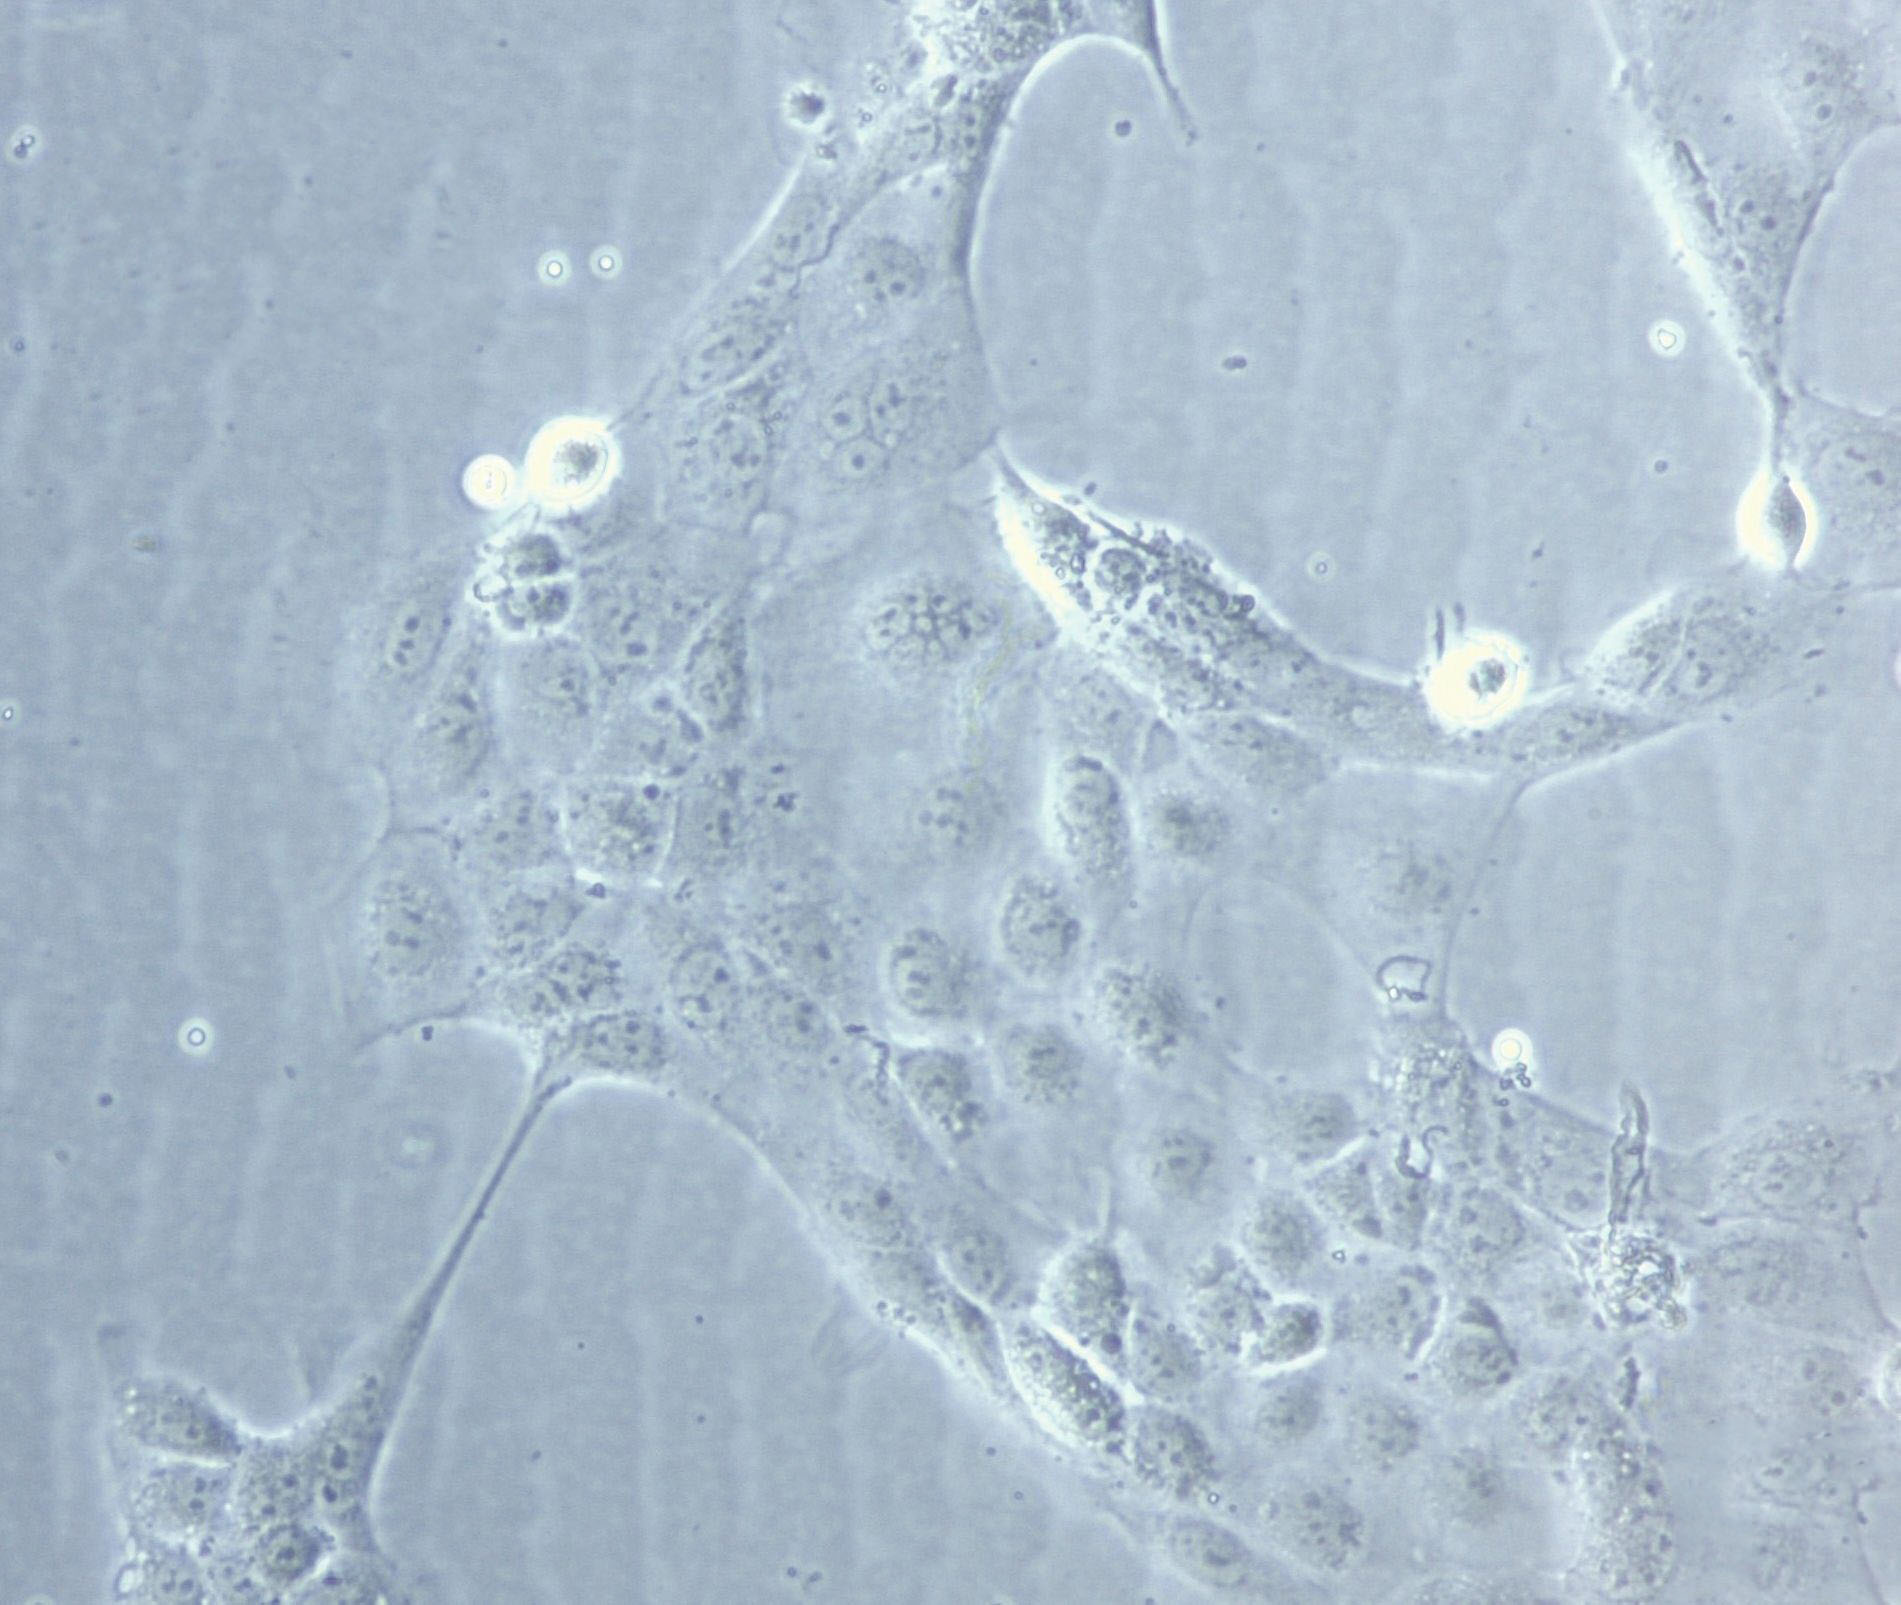 MN9D Cell|小鼠中脑多巴胺能神经元细胞